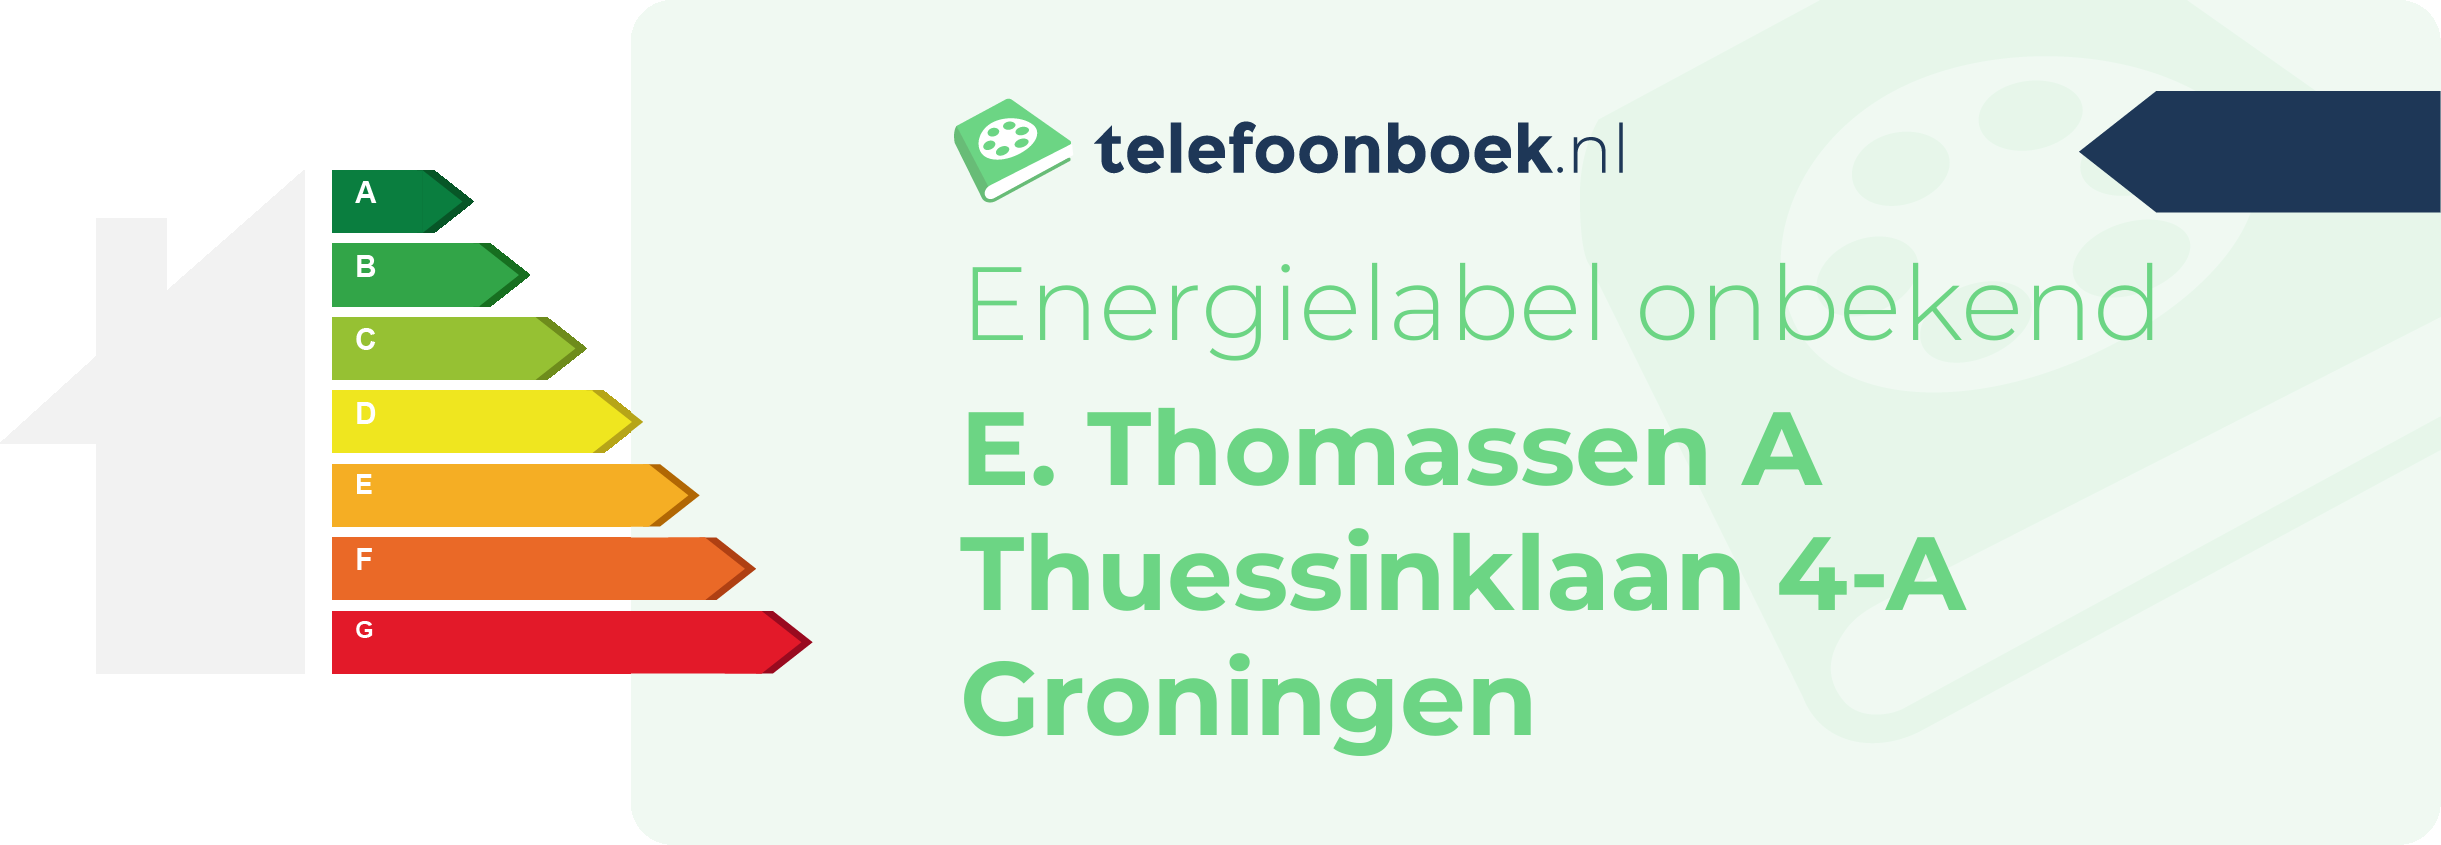 Energielabel E. Thomassen A Thuessinklaan 4-A Groningen